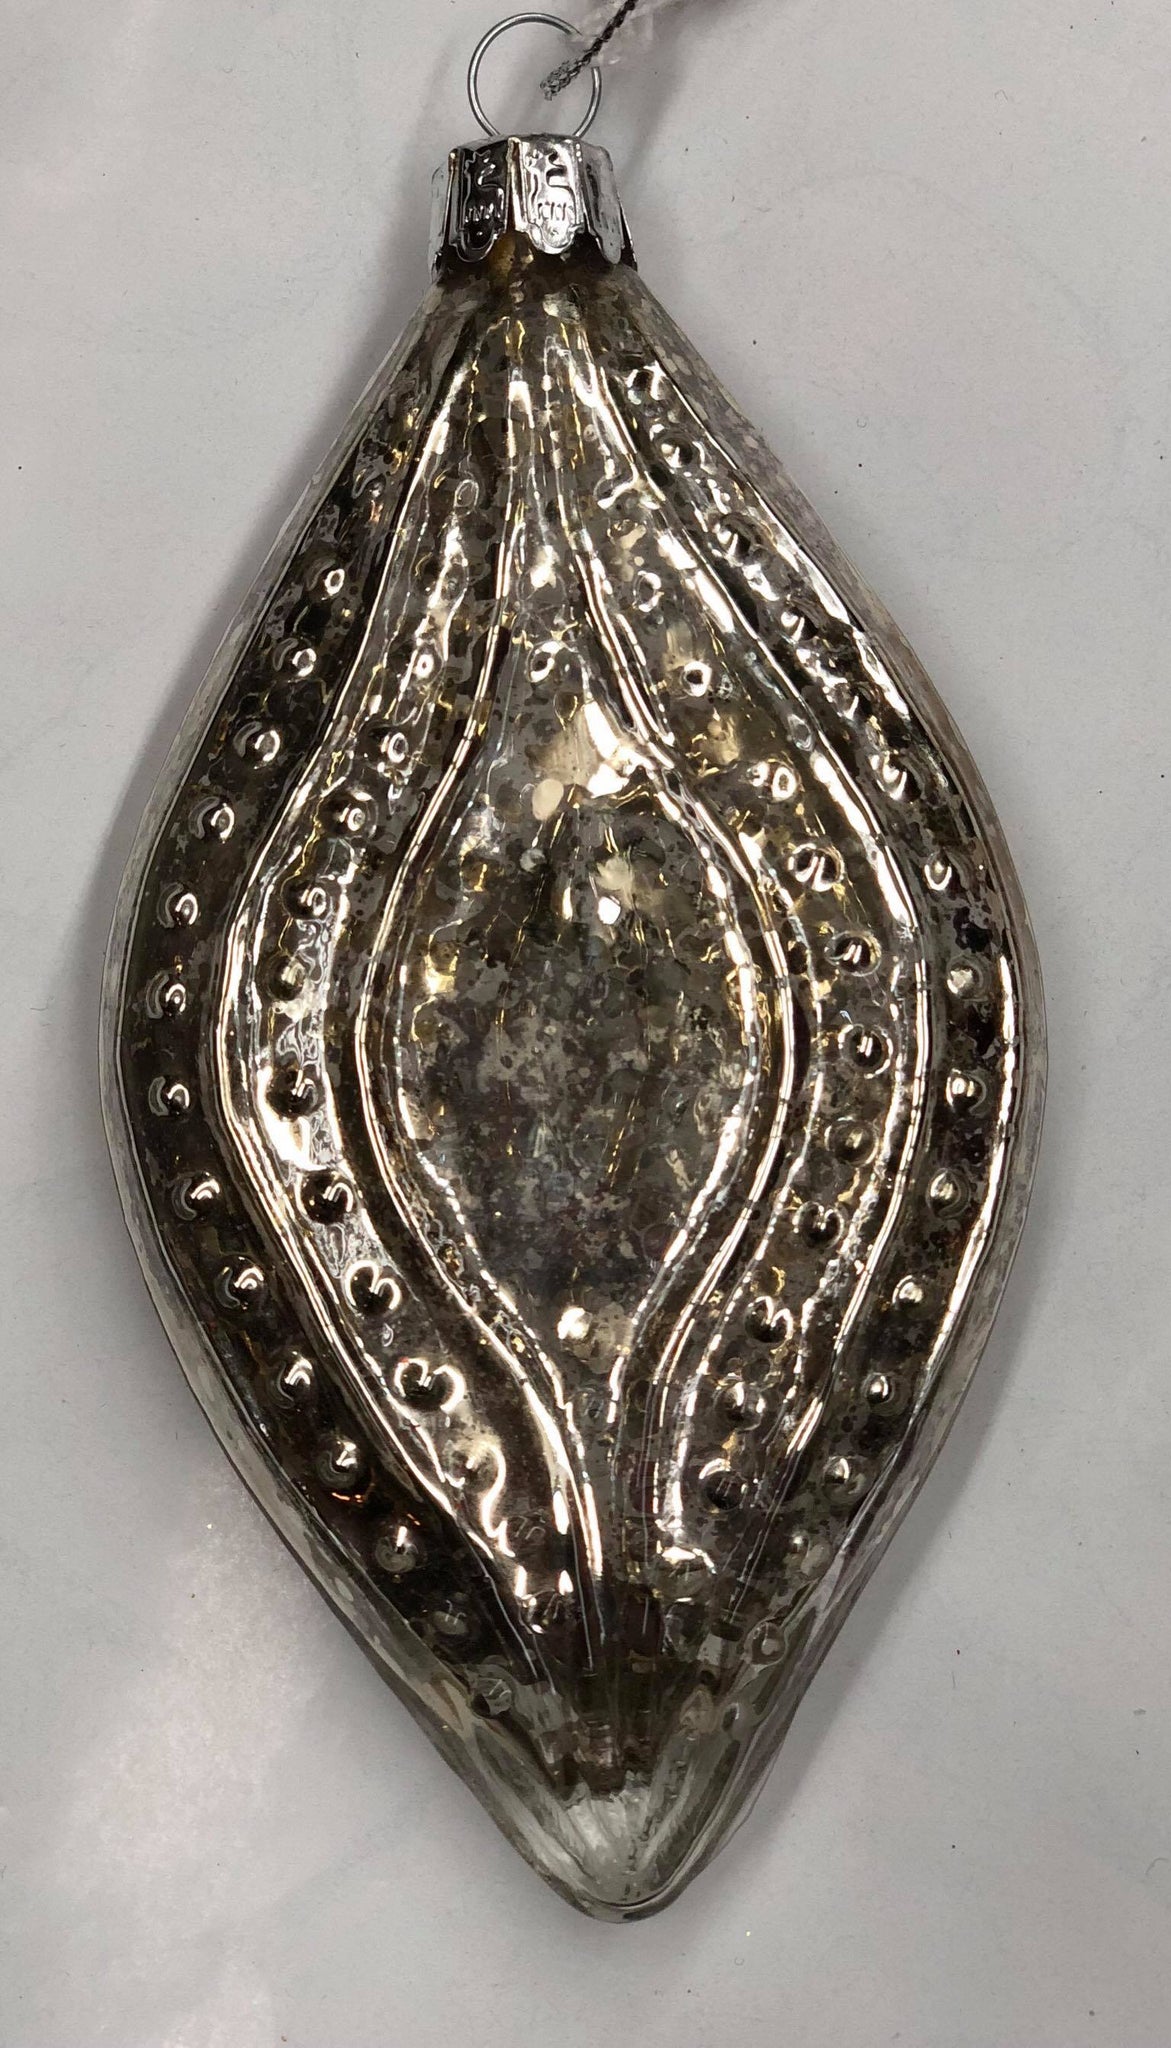 Glass tree ornament "Mercury" long flat diamond